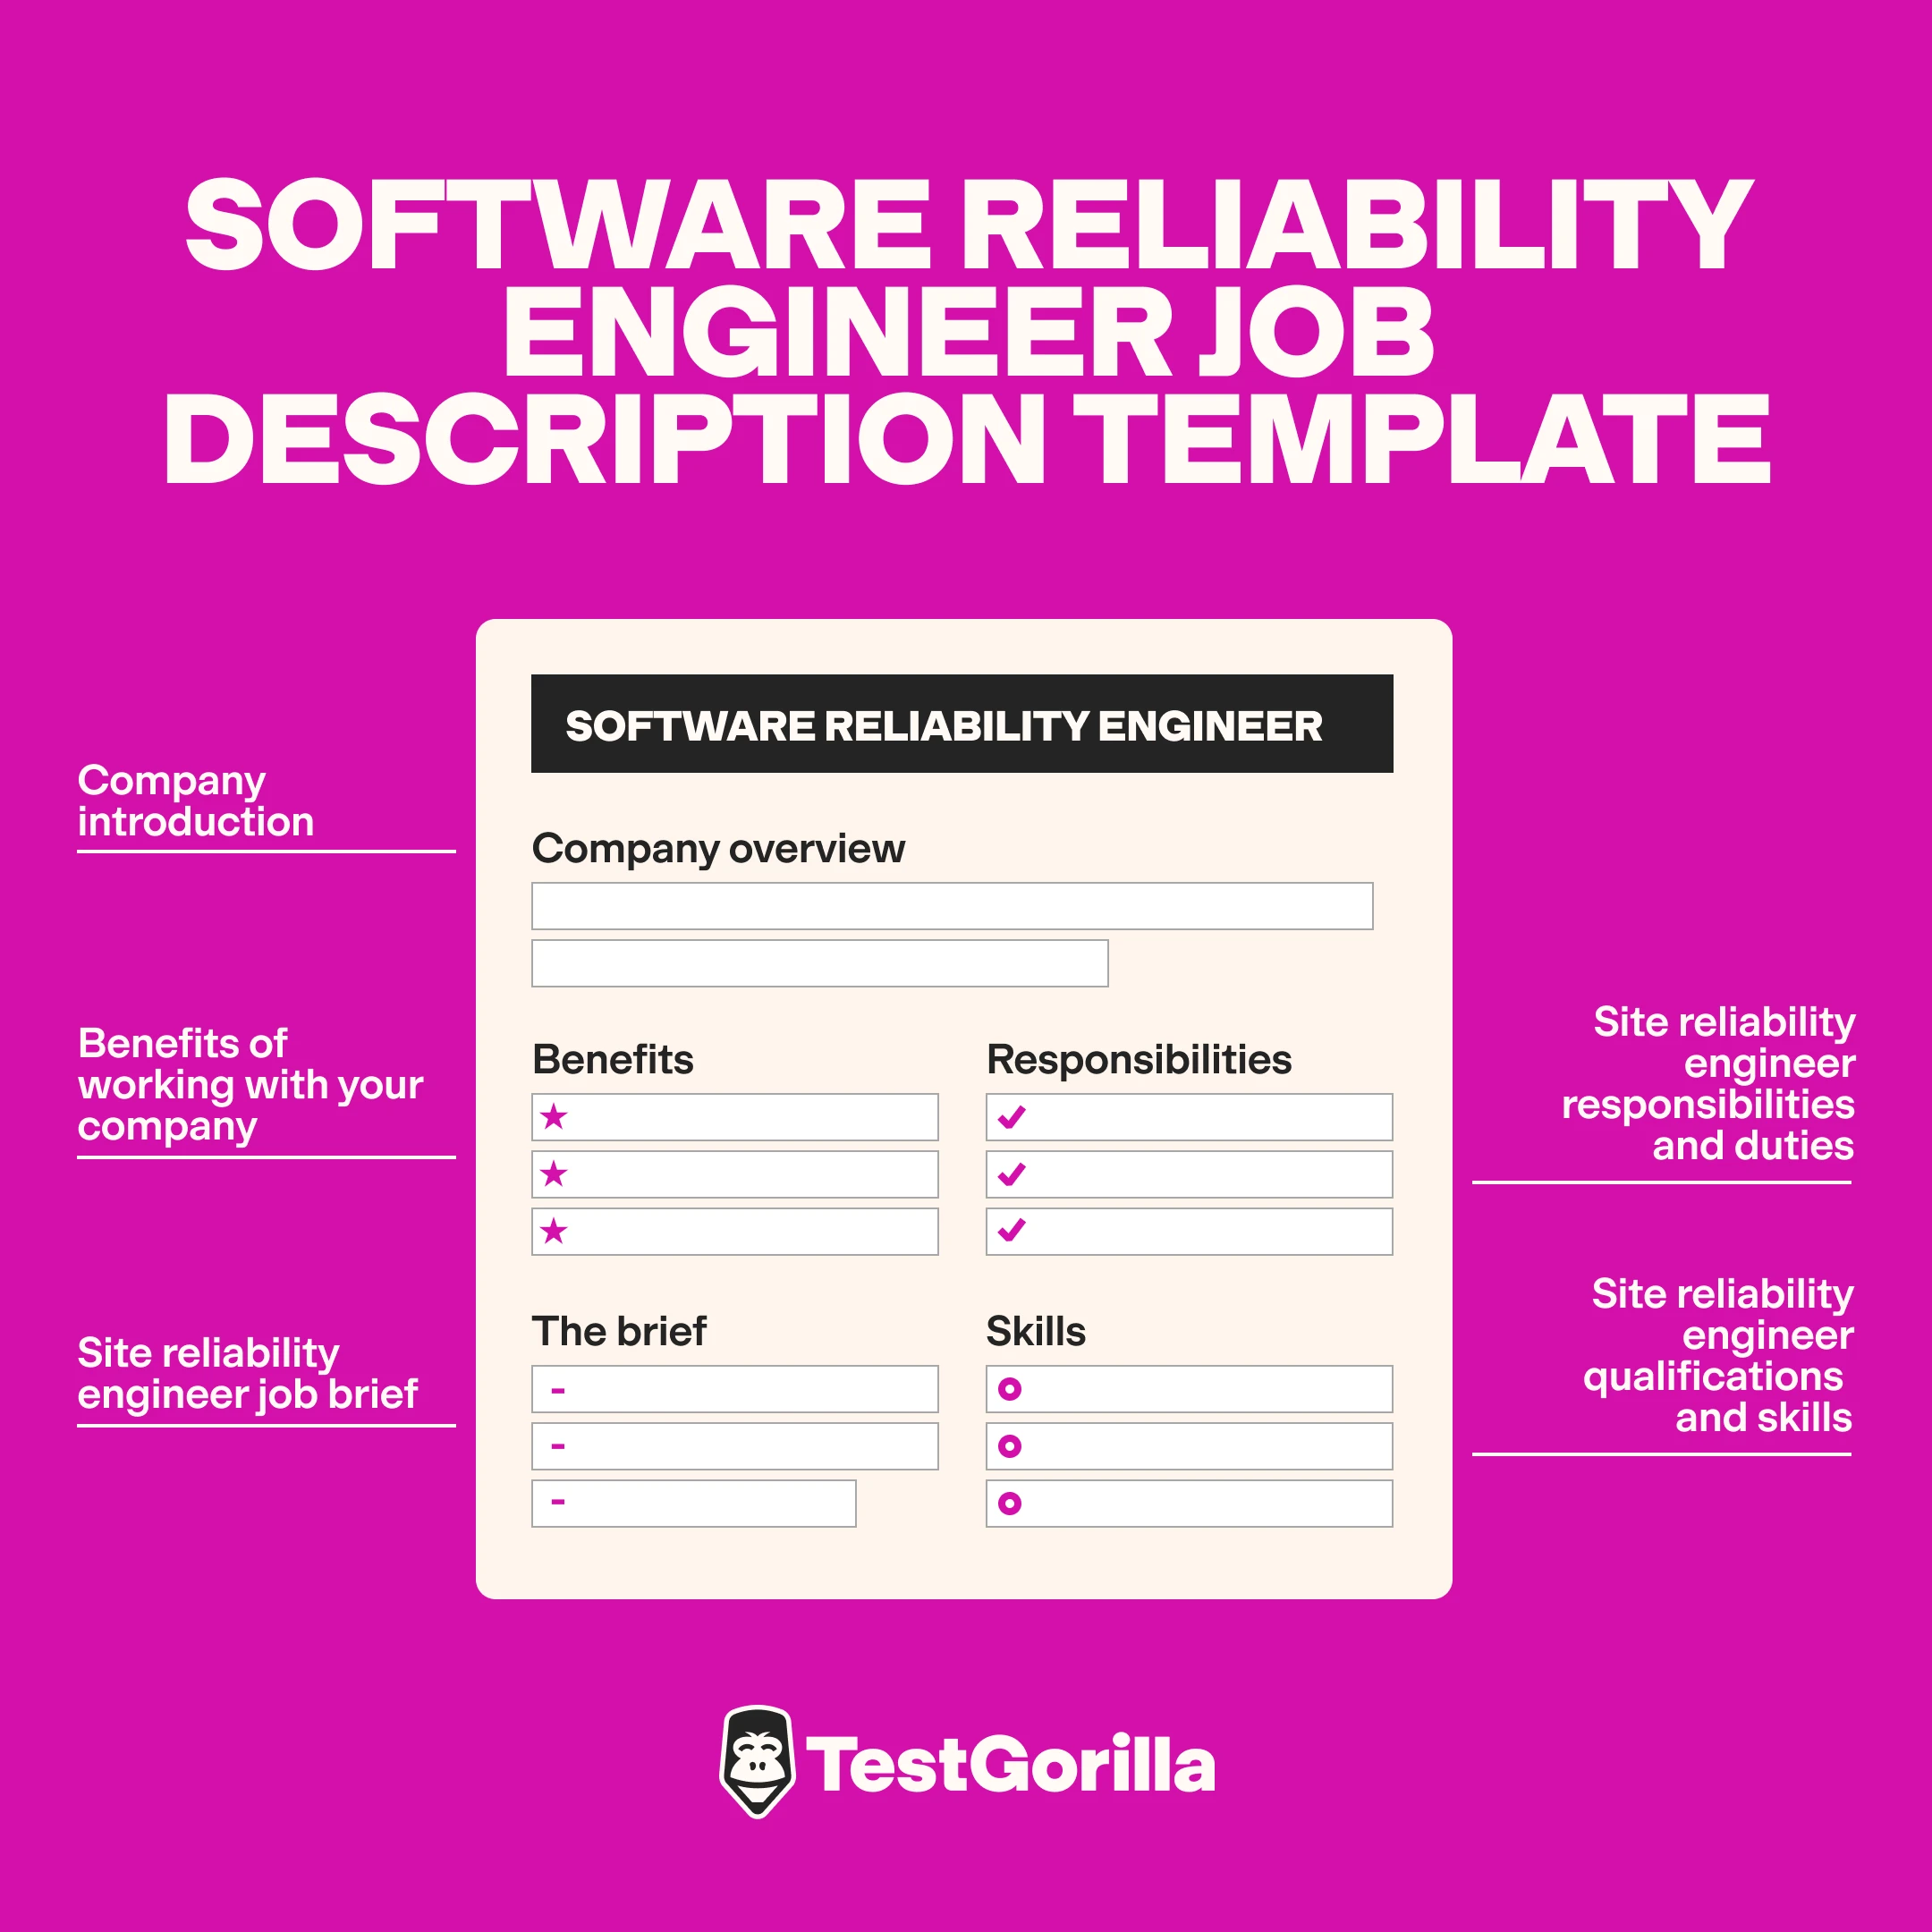 Software reliability engineer job description template